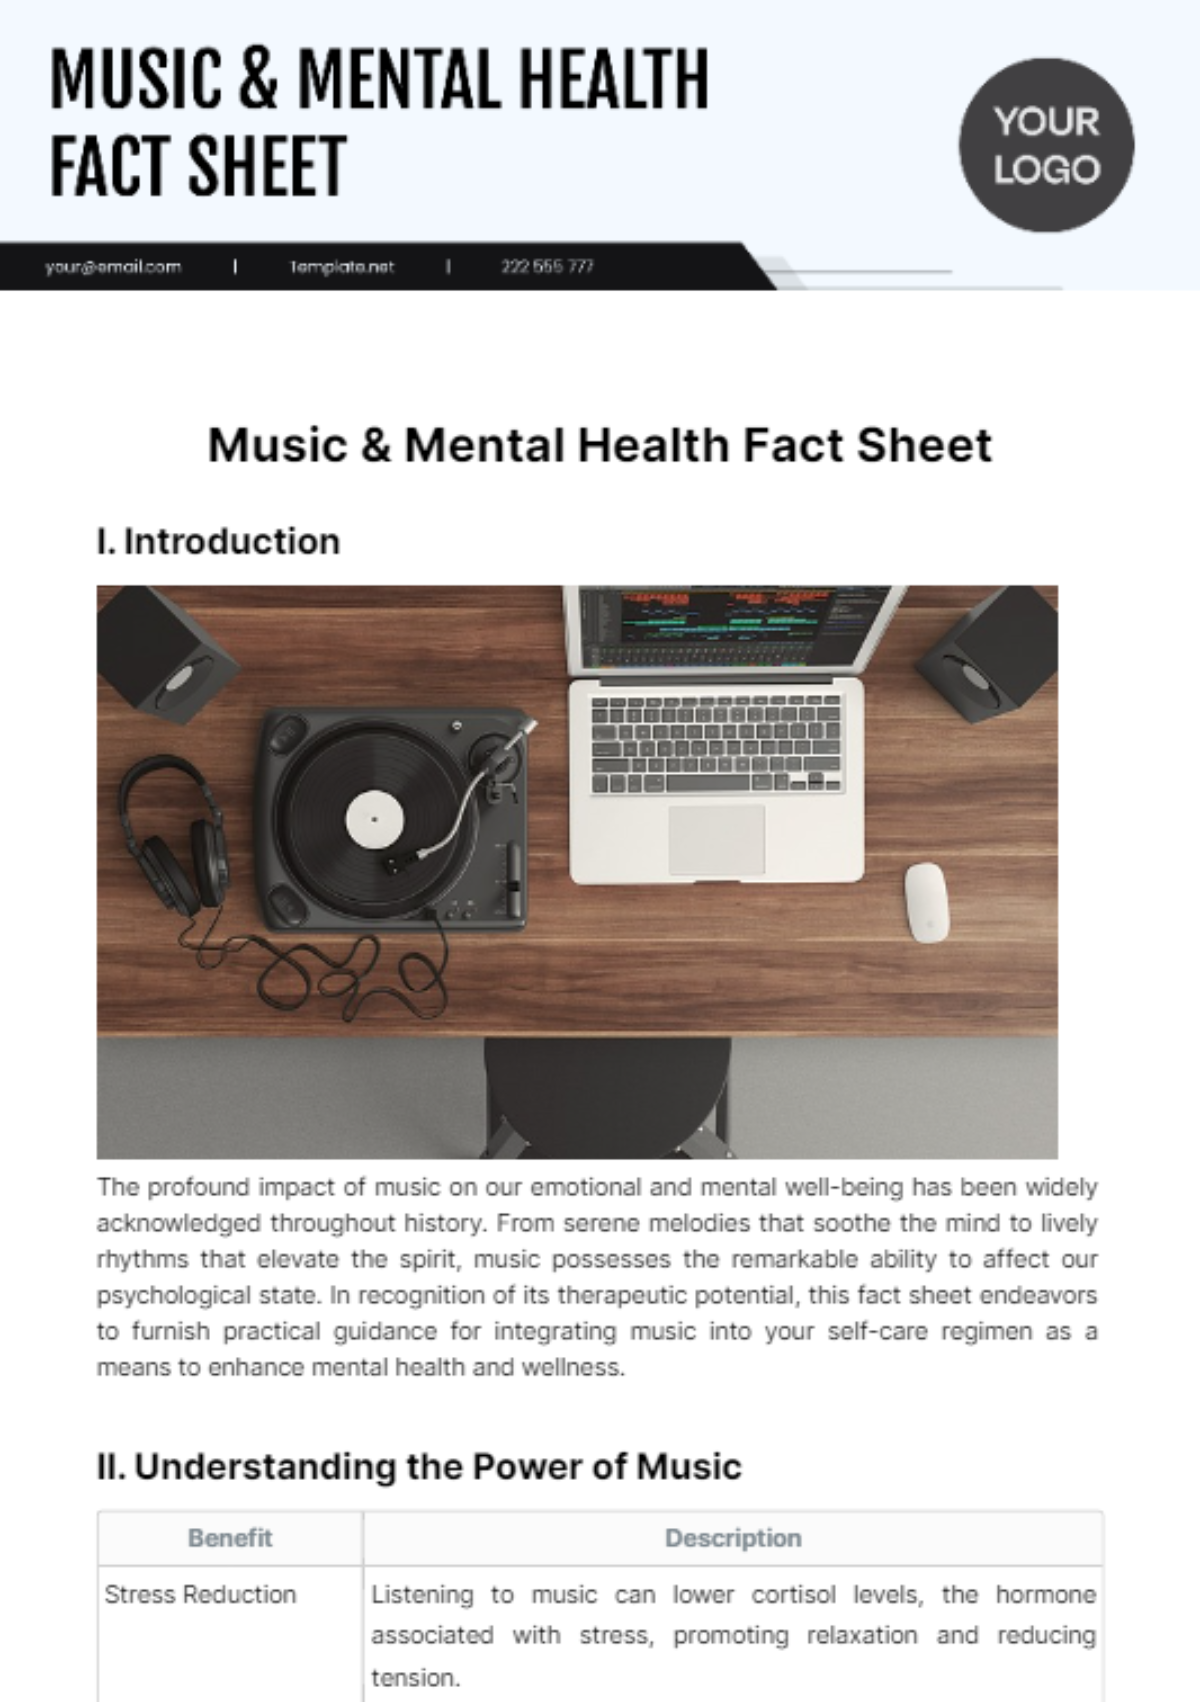 Free Music & Mental Health Fact Sheet Template